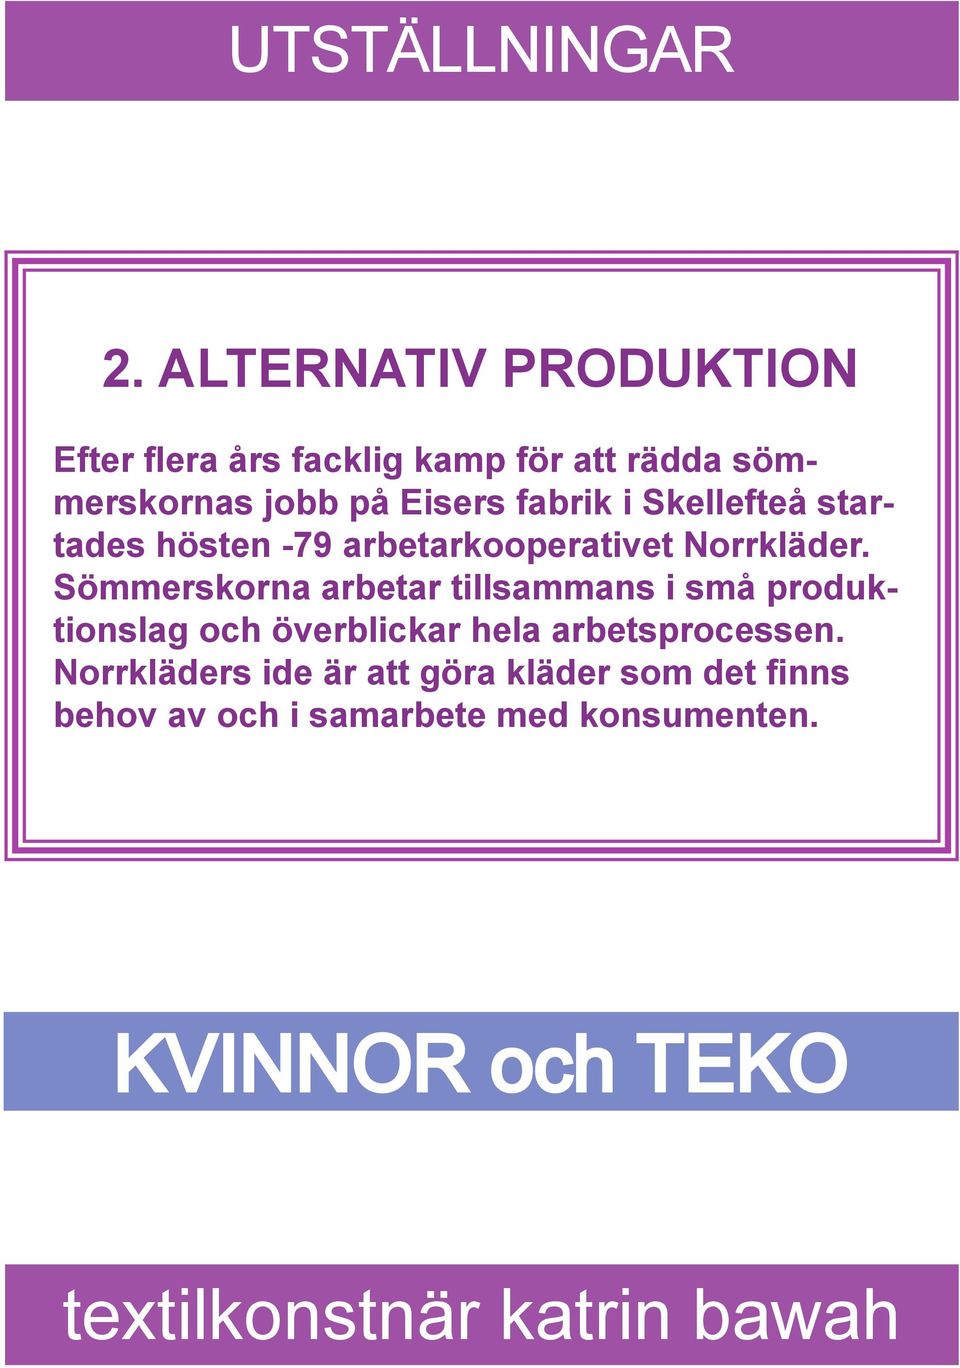 Eisers fabrik i Skellefteå startades hösten -79 arbetarkooperativet Norrkläder.